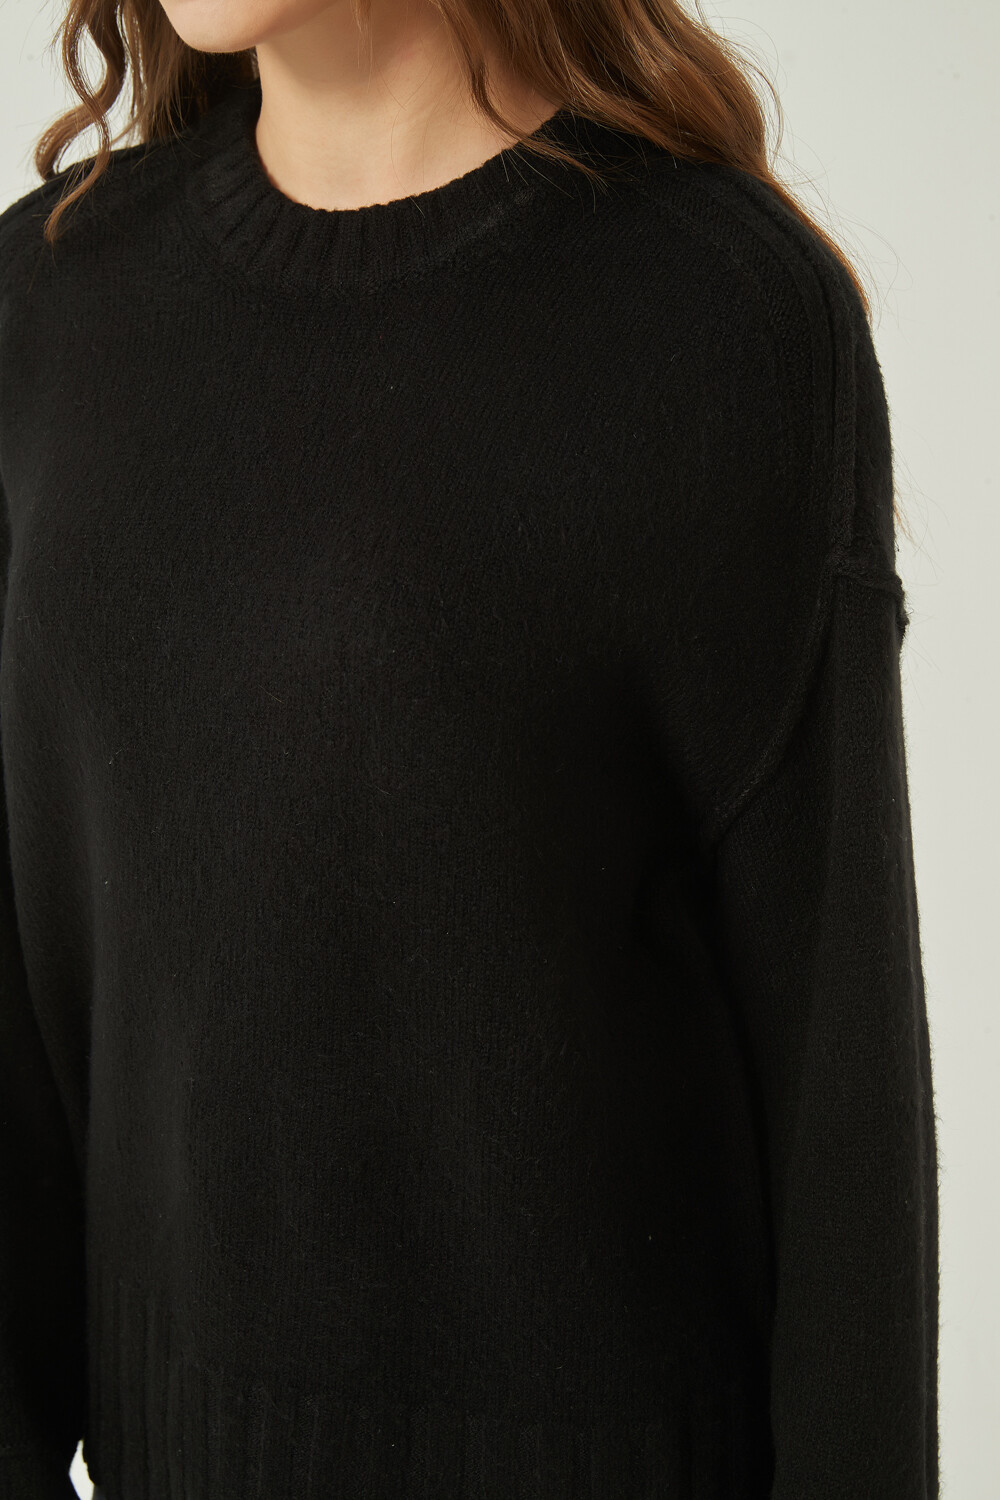 Sweater Serendipia Negro